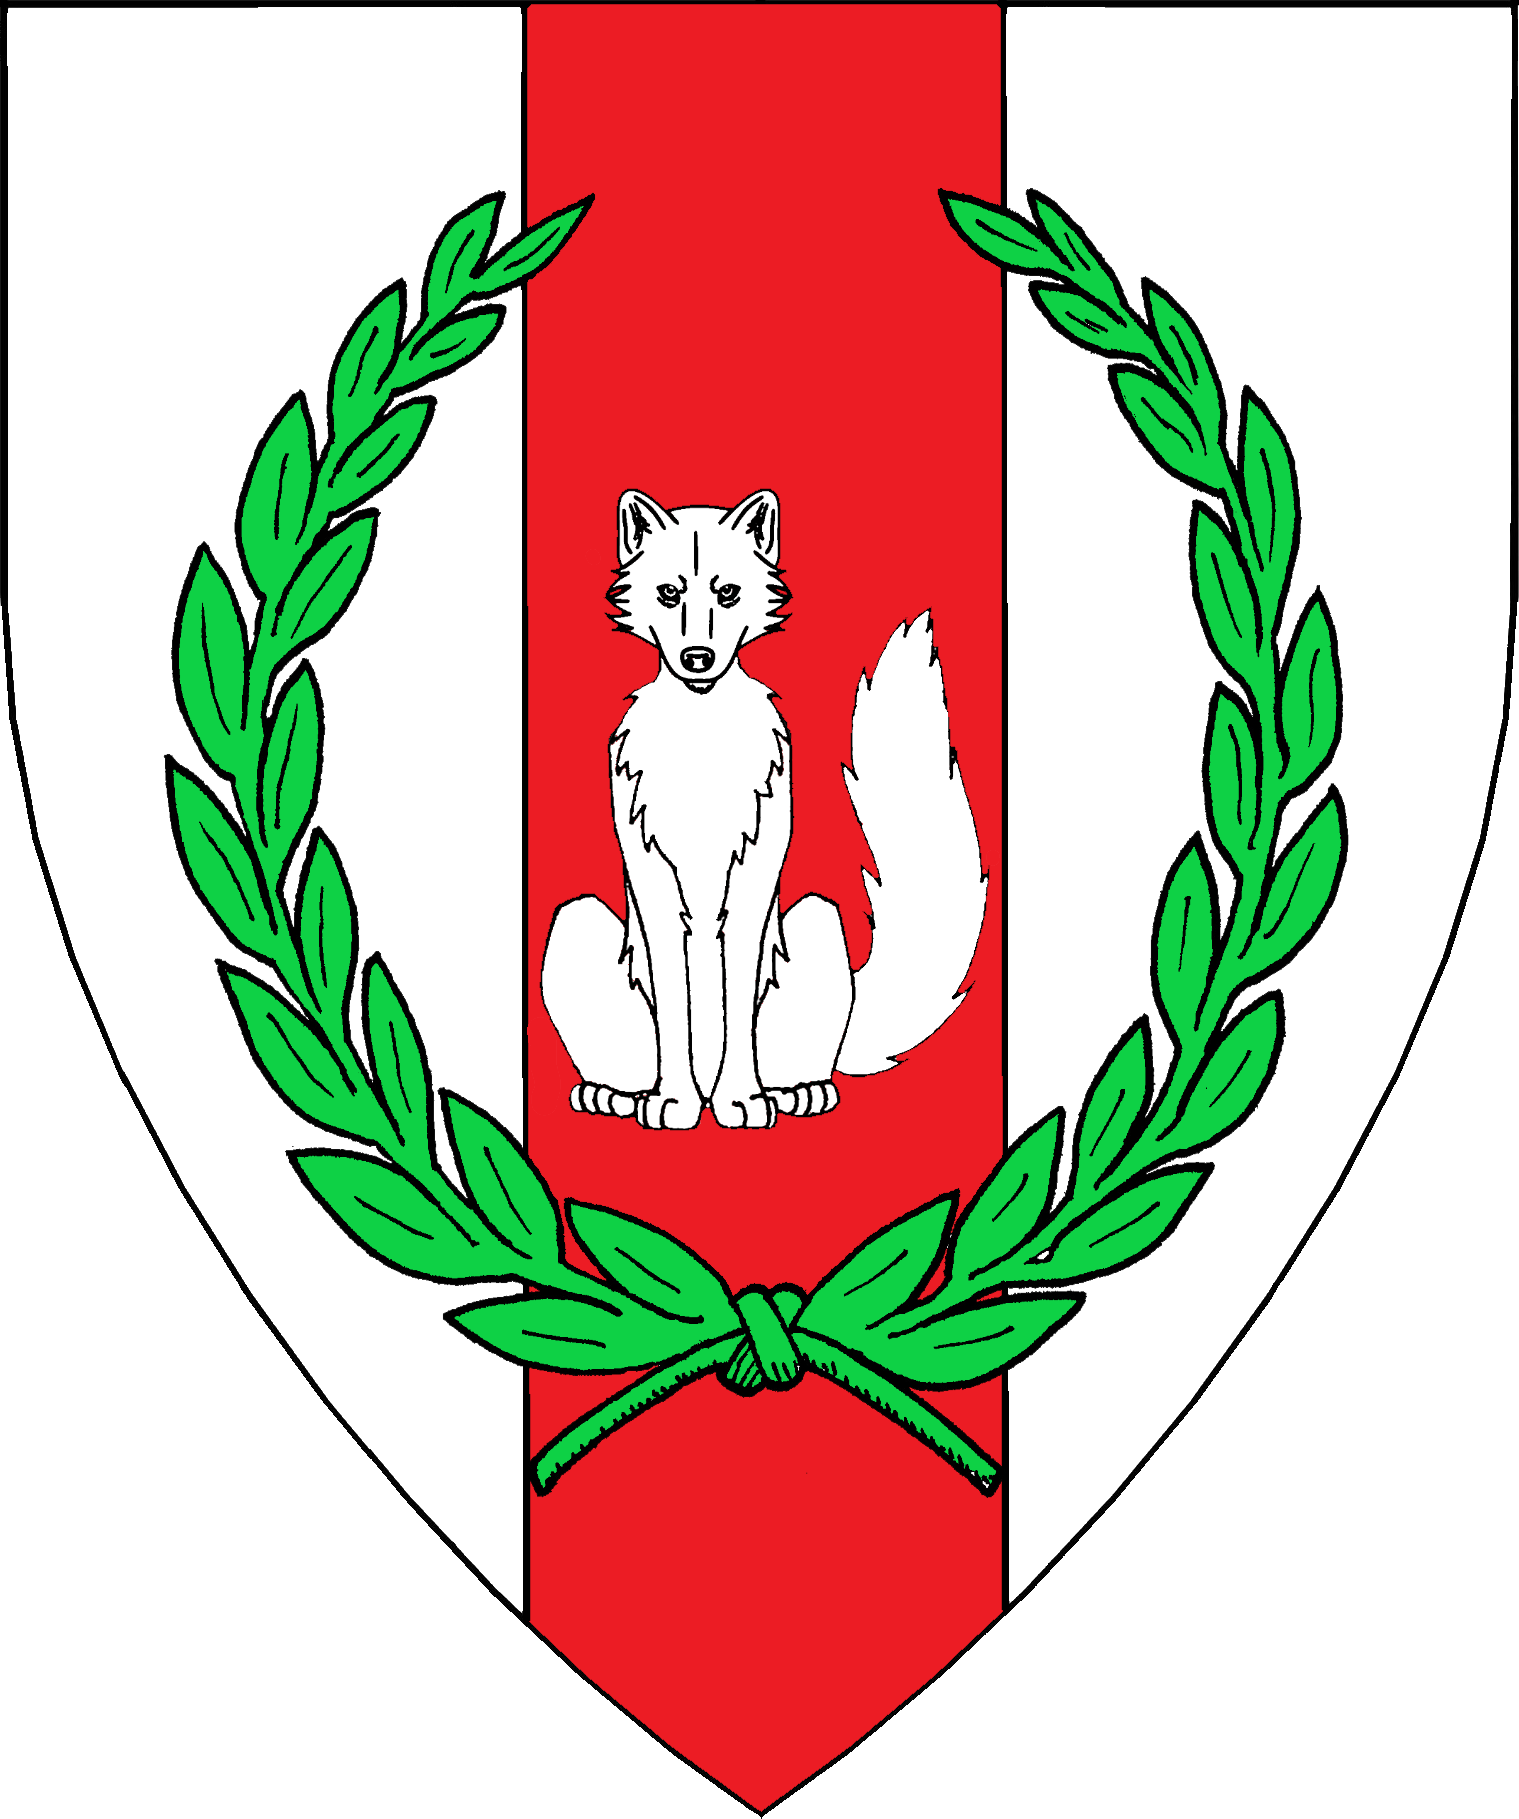 Arms of the college of Blaiddwyn